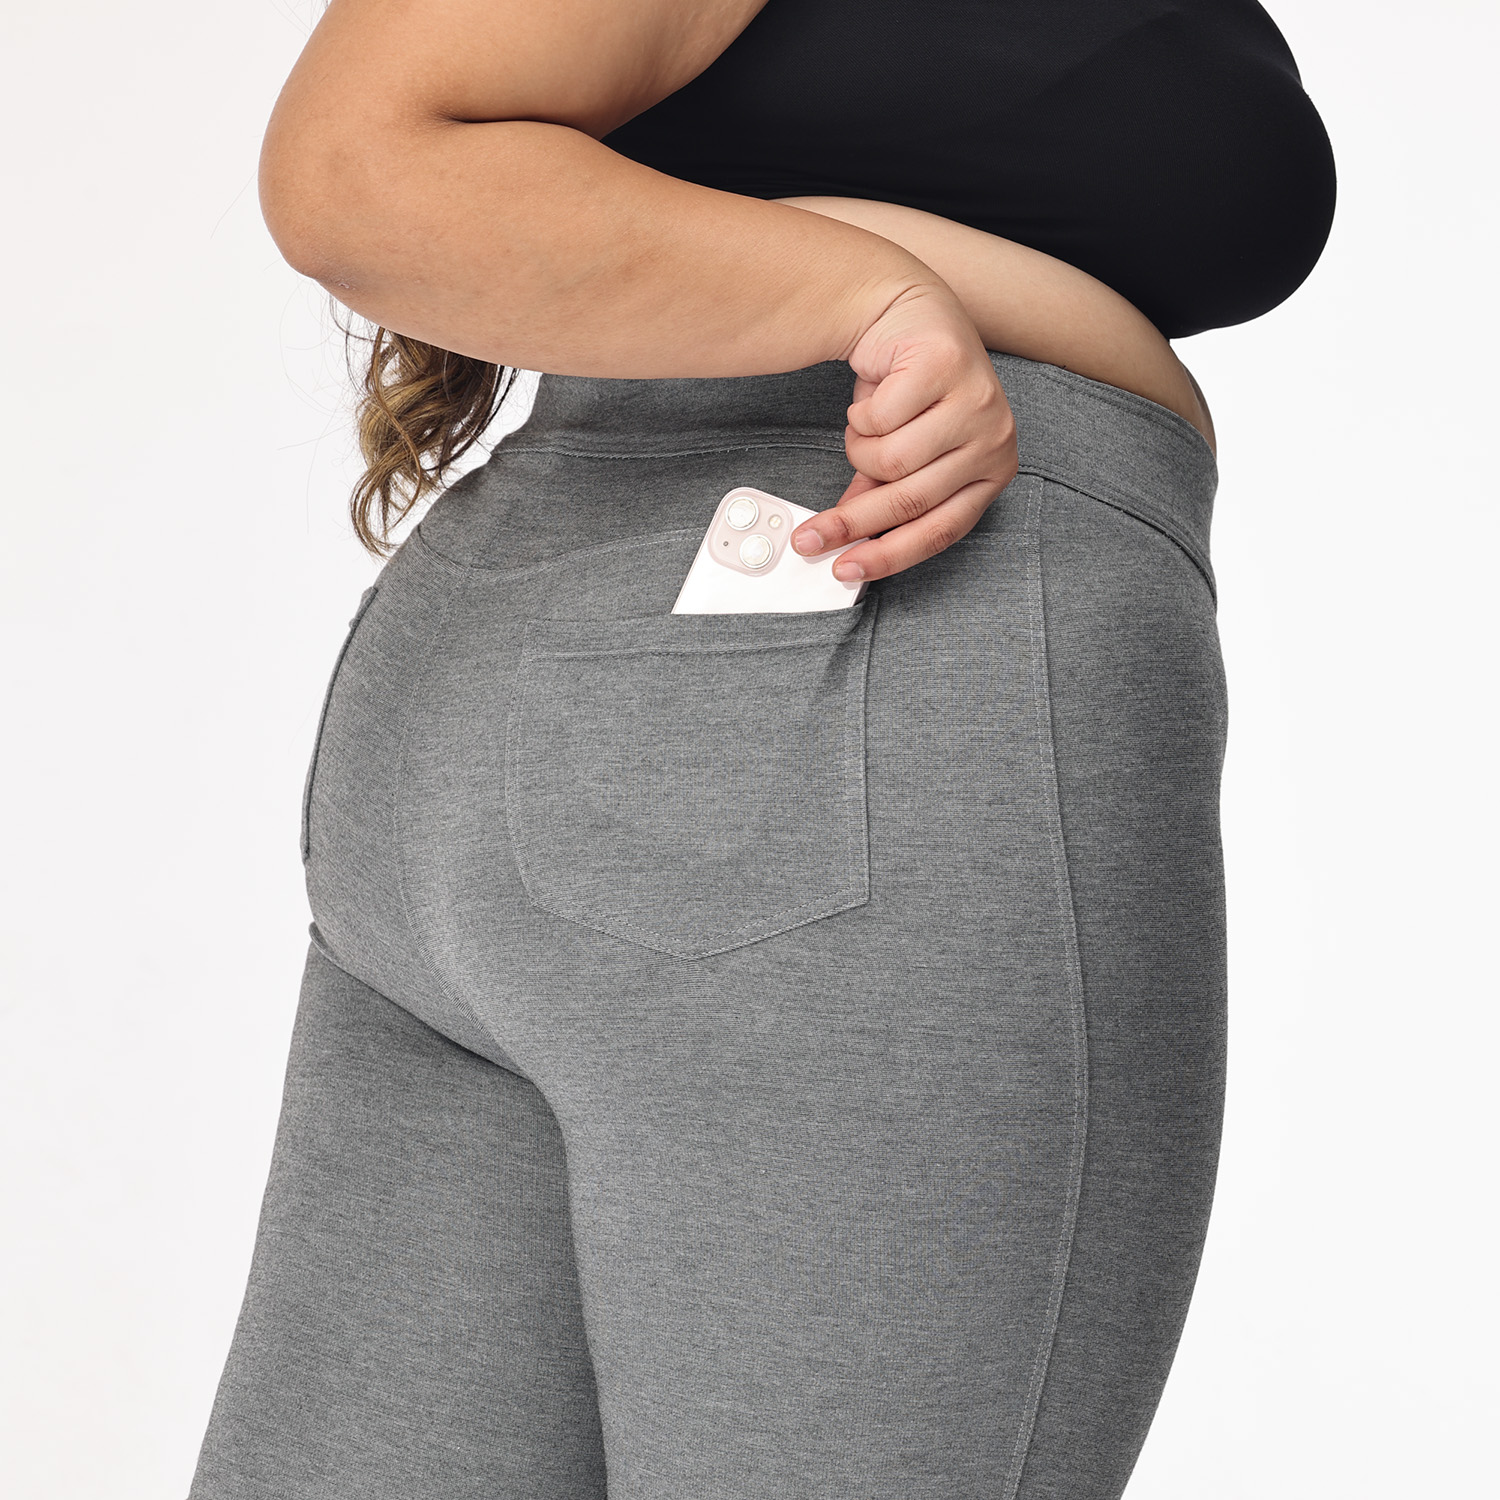 Grey jeggings women Plus size compression pant 2 back pockets - Belore Slims